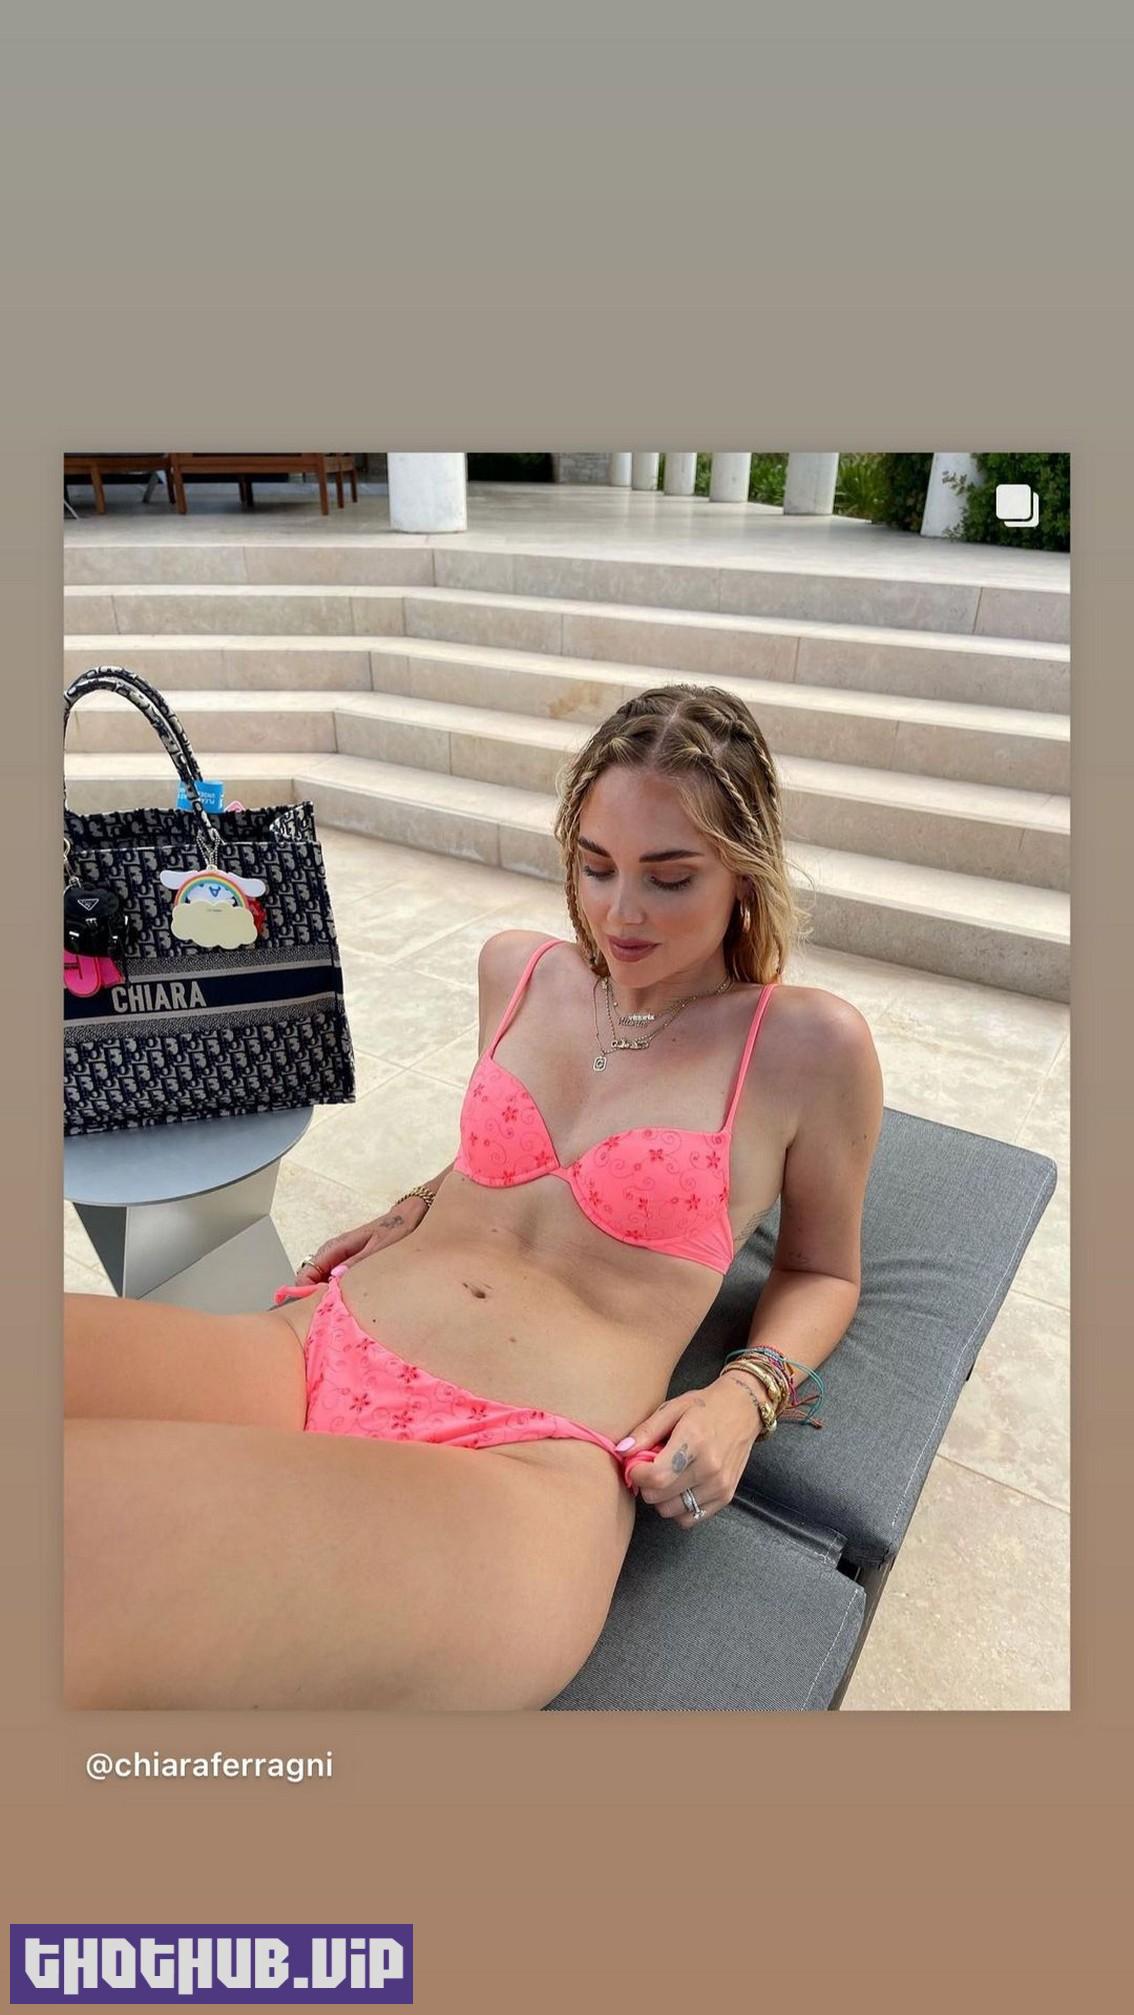 1694111296 454 Chiara Ferragni Hot In Pink Bikini 6 Photos And Video